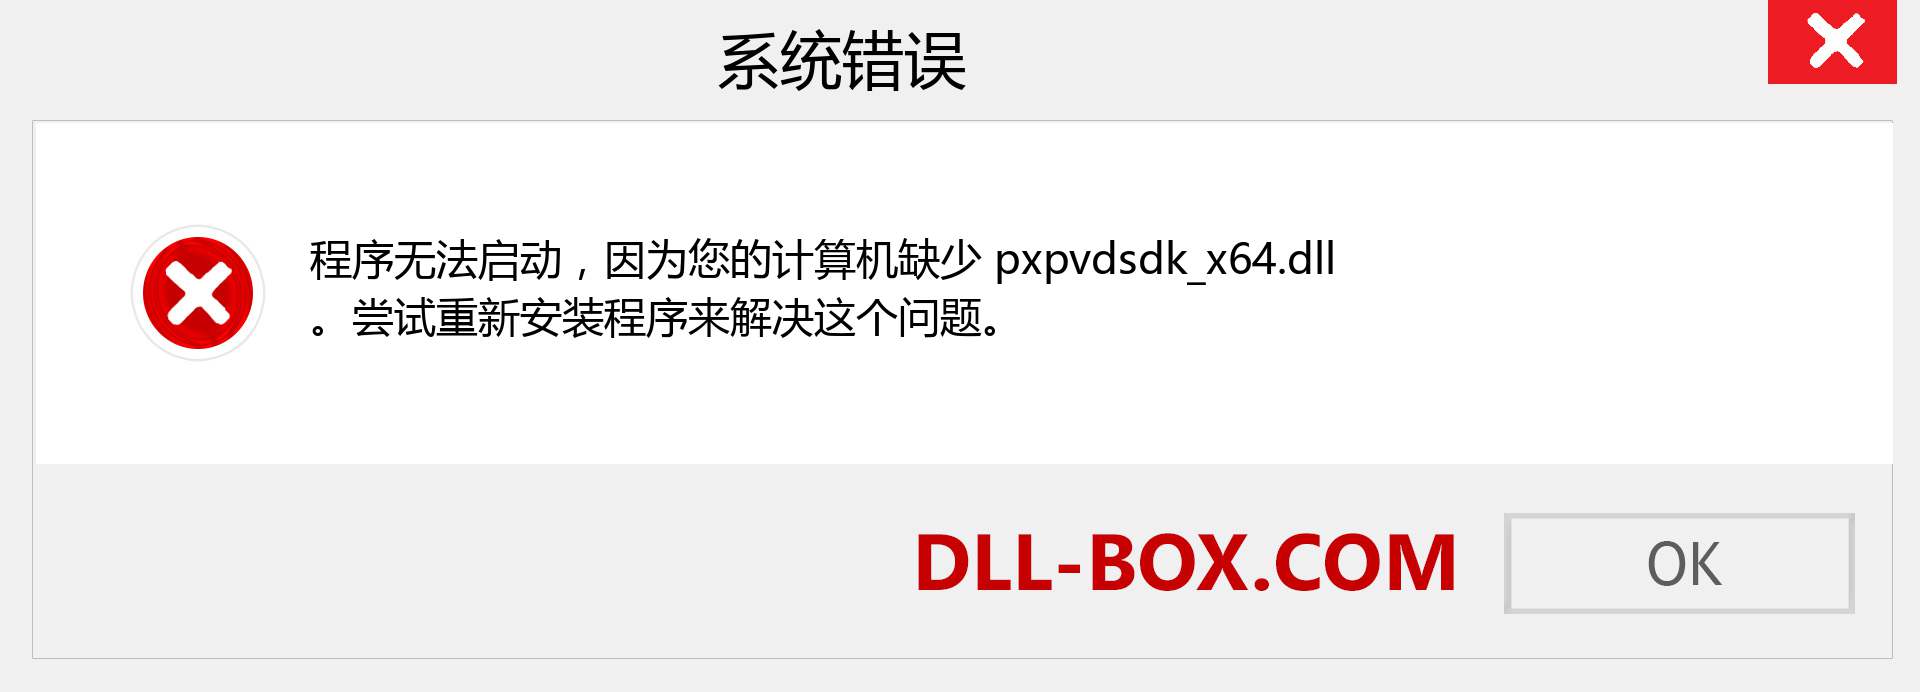 pxpvdsdk_x64.dll 文件丢失？。 适用于 Windows 7、8、10 的下载 - 修复 Windows、照片、图像上的 pxpvdsdk_x64 dll 丢失错误